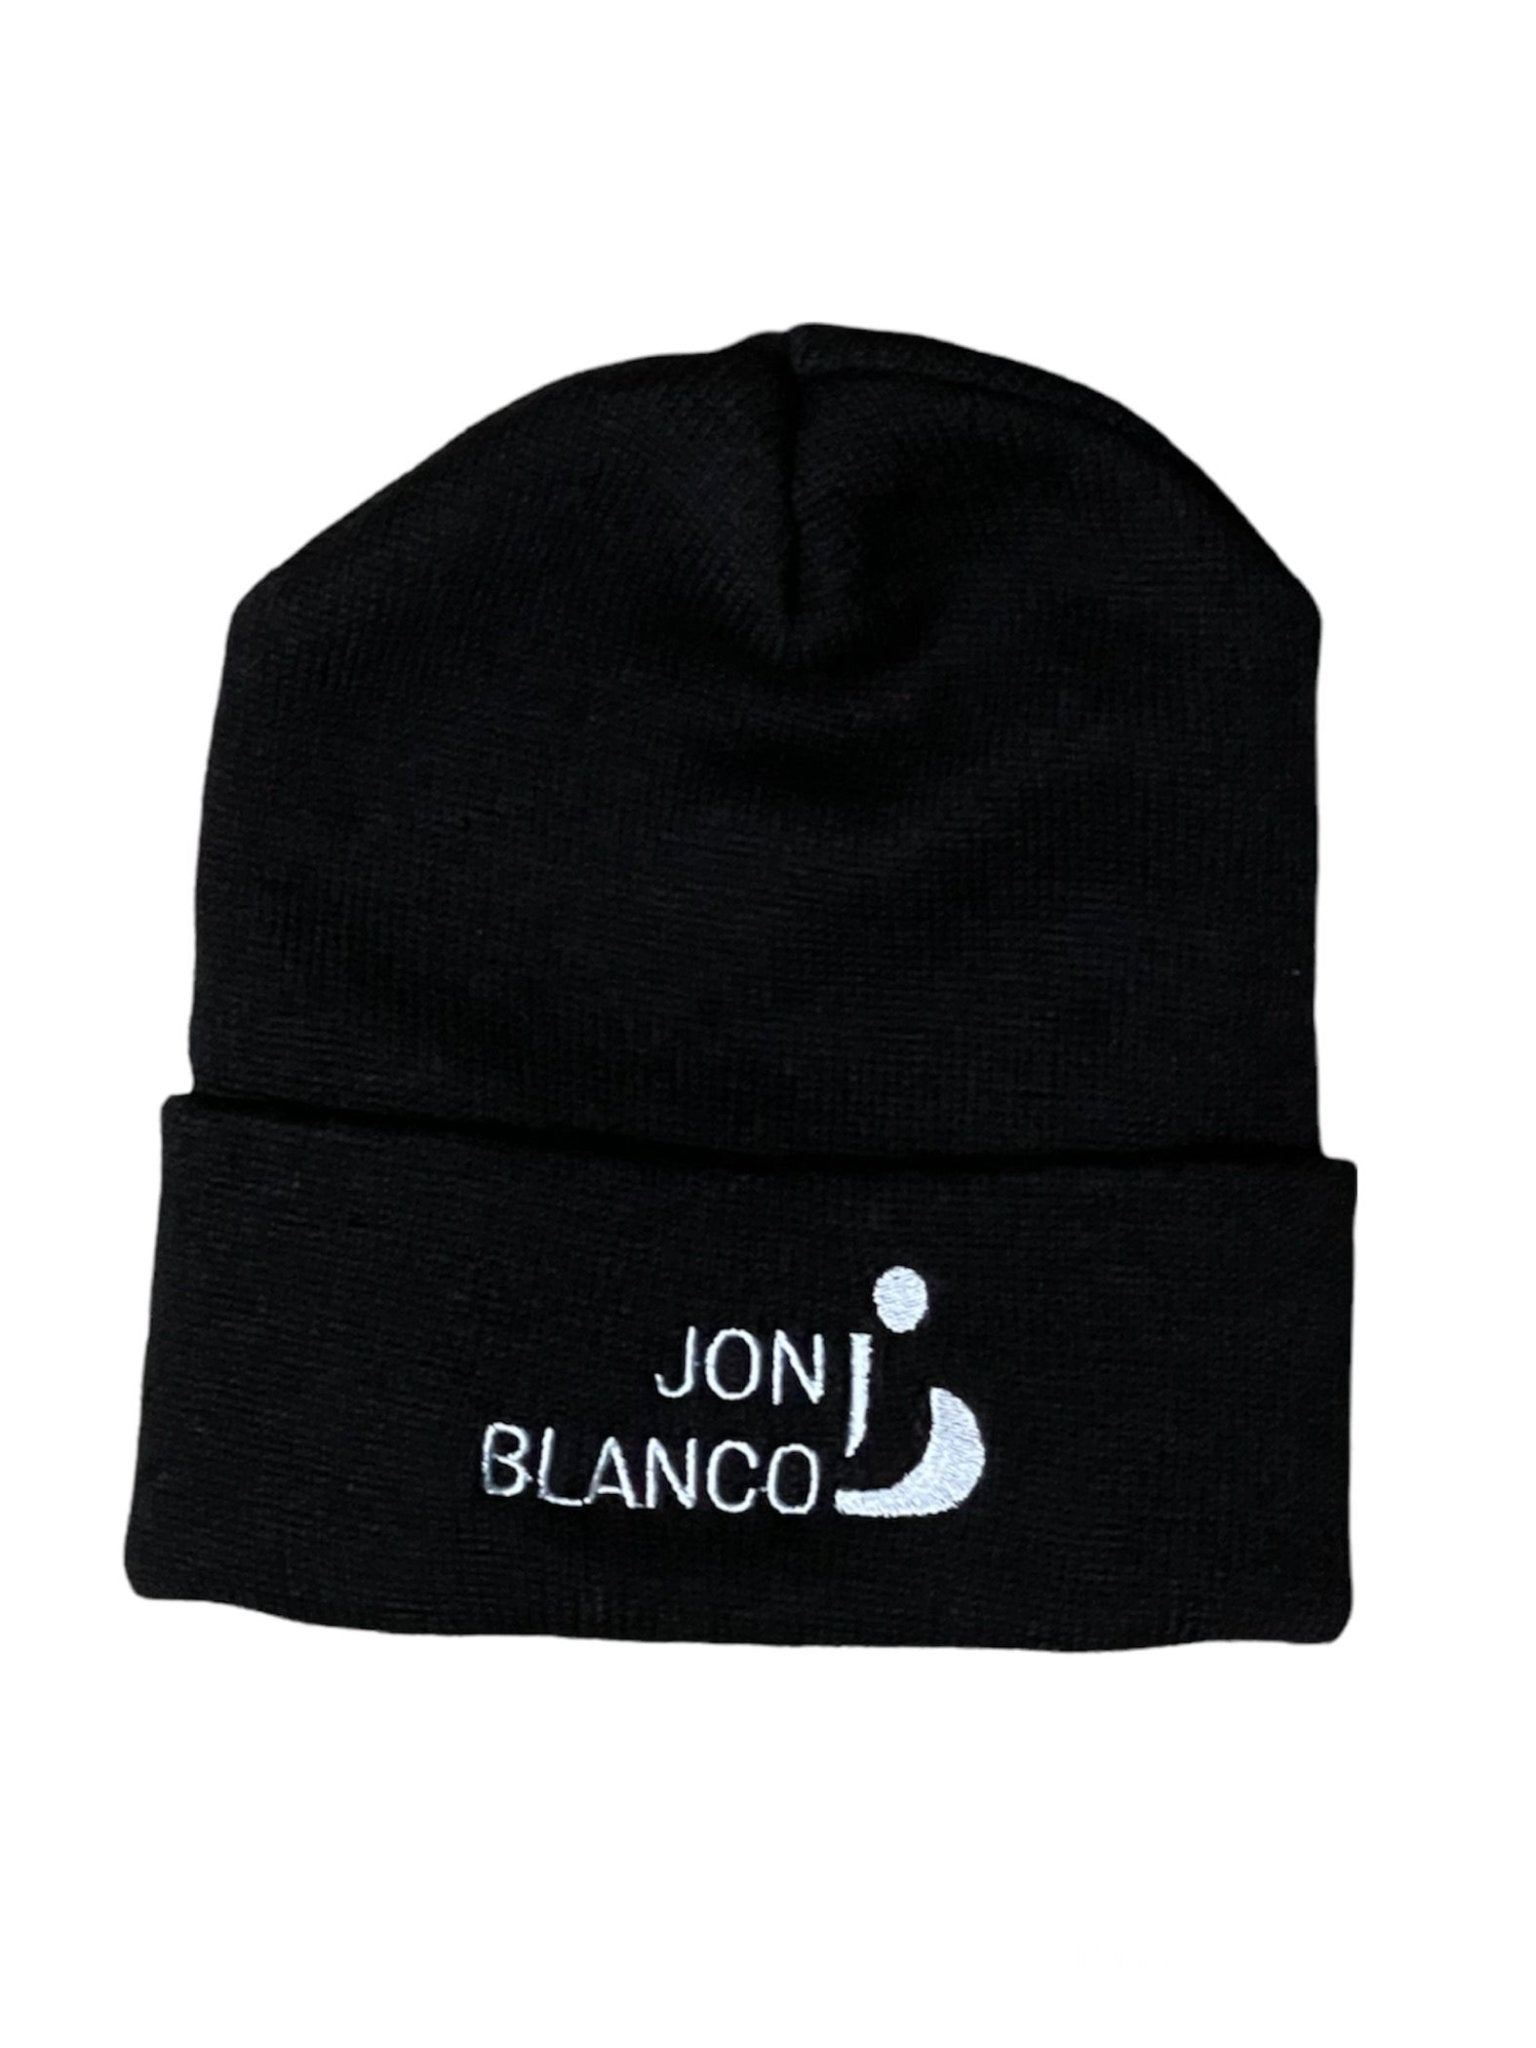 USA Made Logo Beanie - JON BLANCO